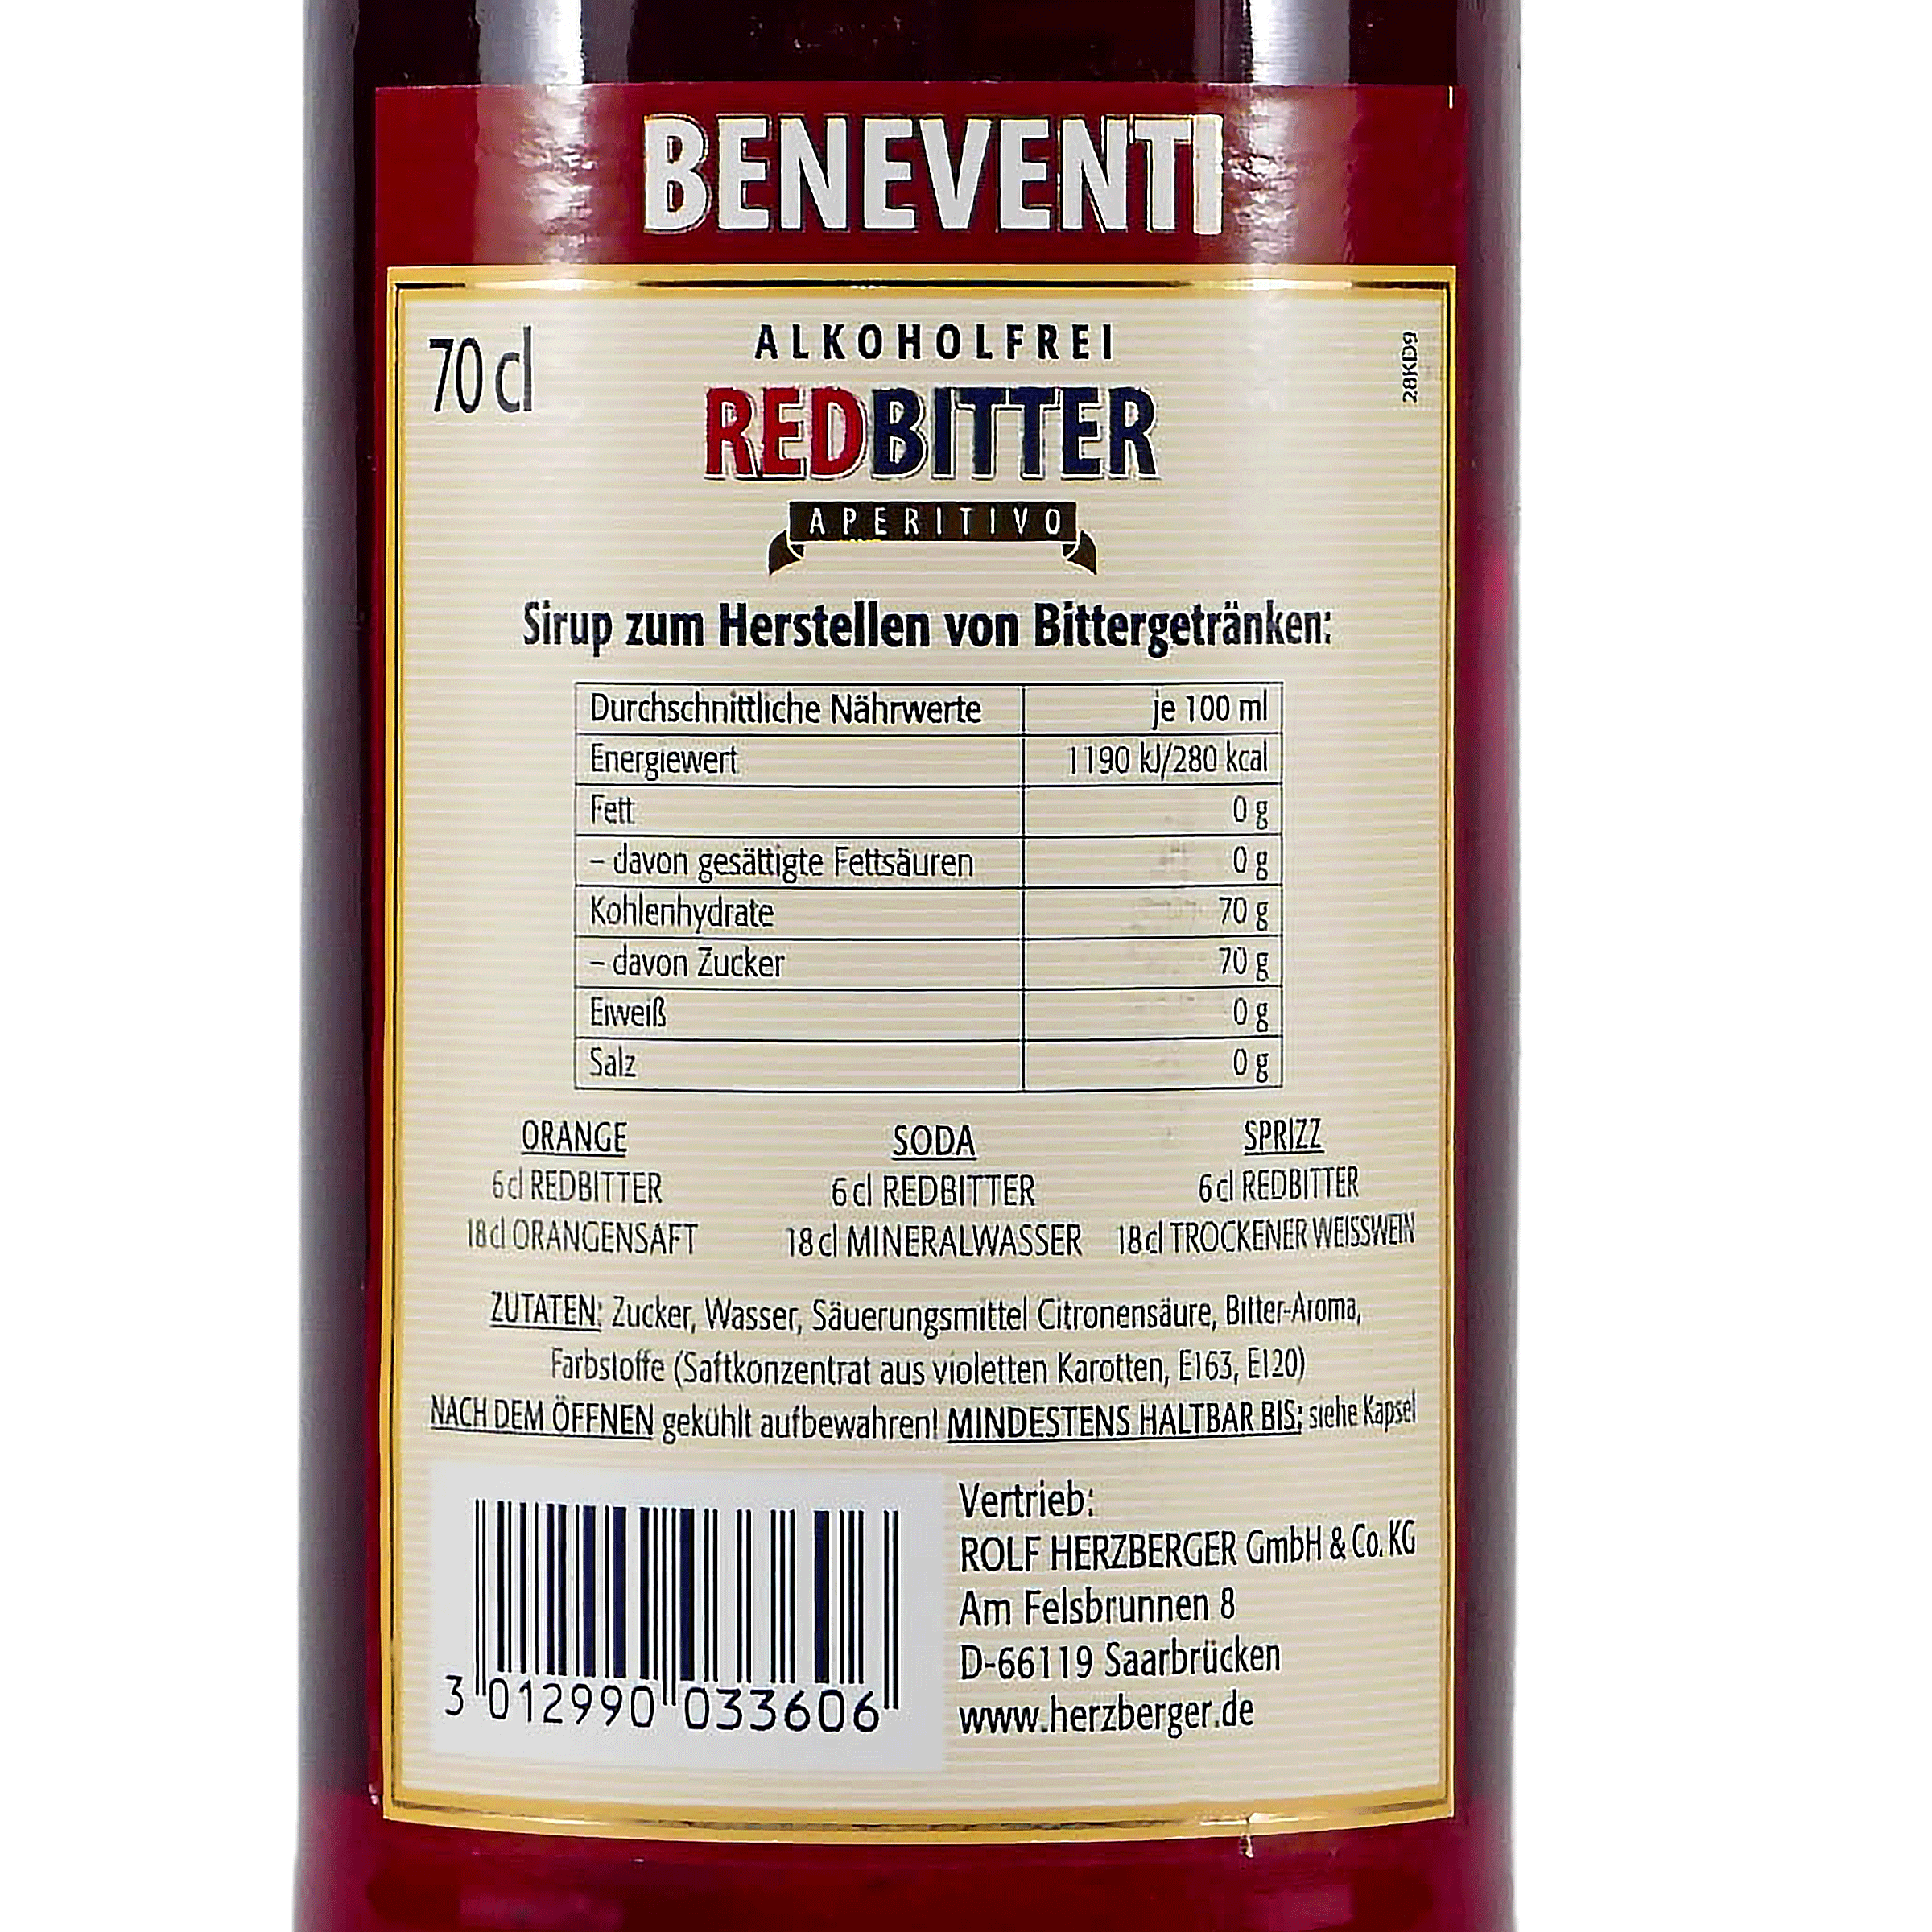 Beneventi Red Bitter Aperitivo -alkoholfrei-